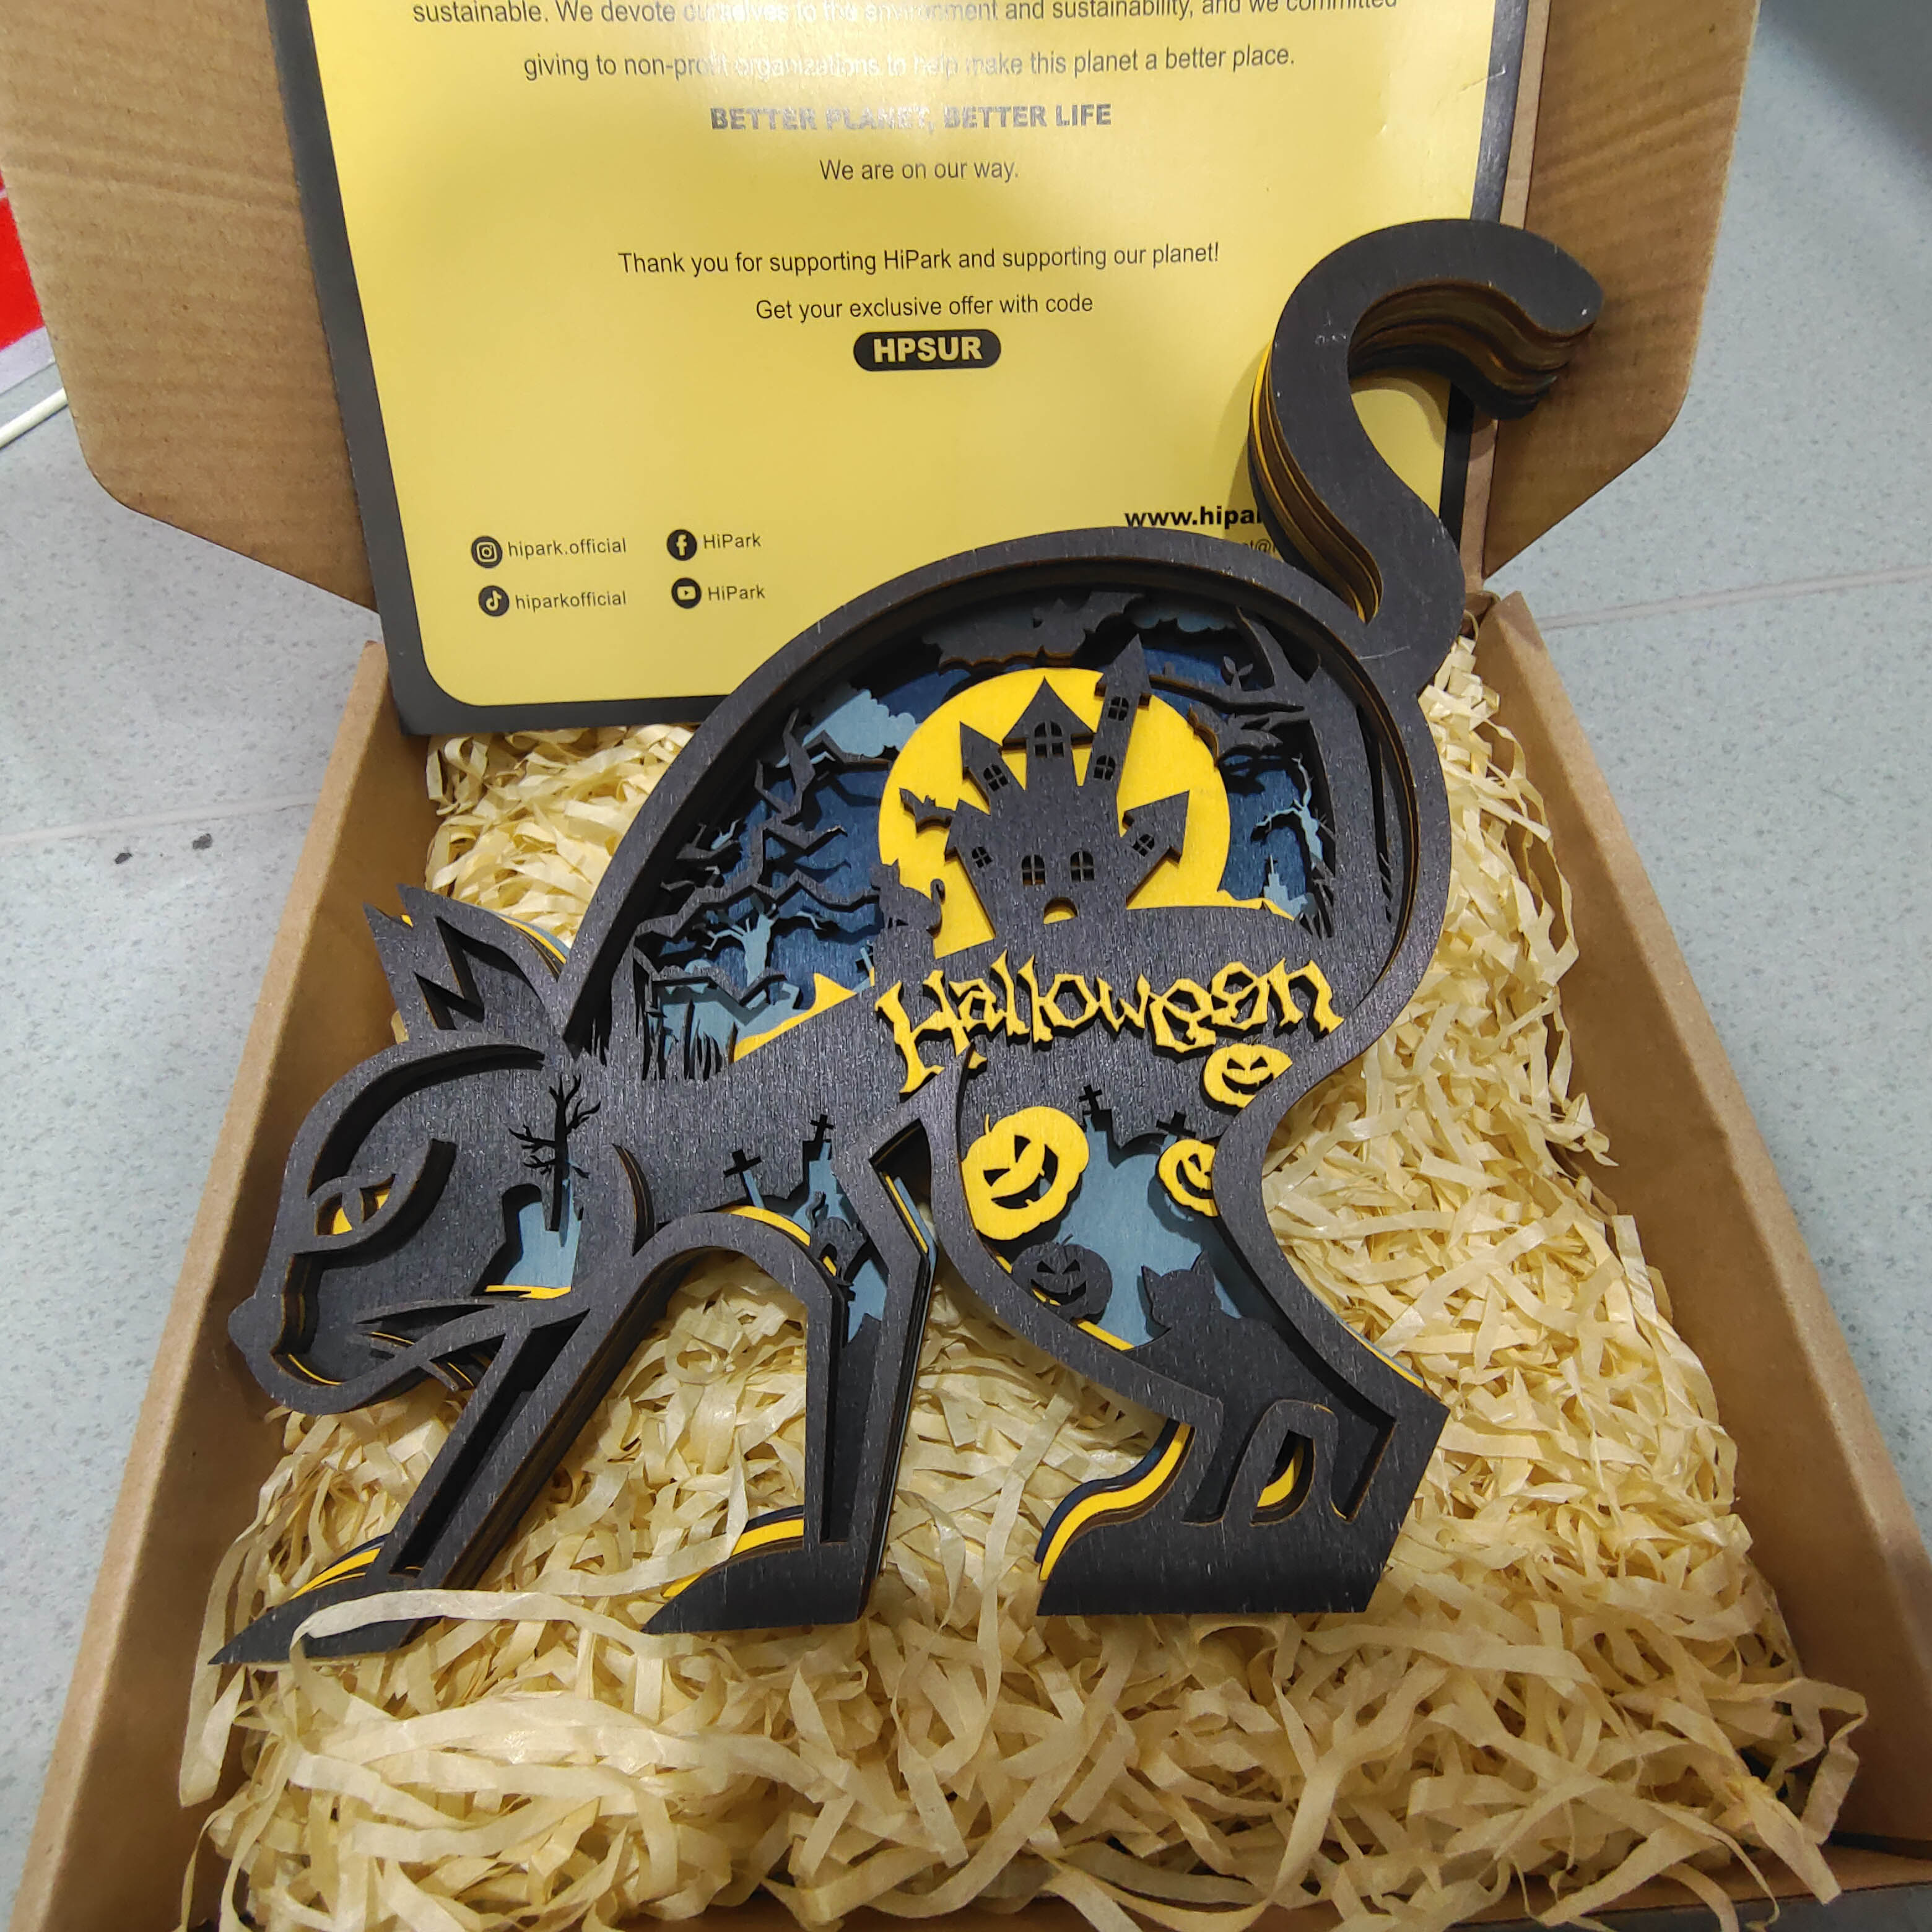 New Arrivals✨-Halloween Black Cat Carving Handcraft Gift